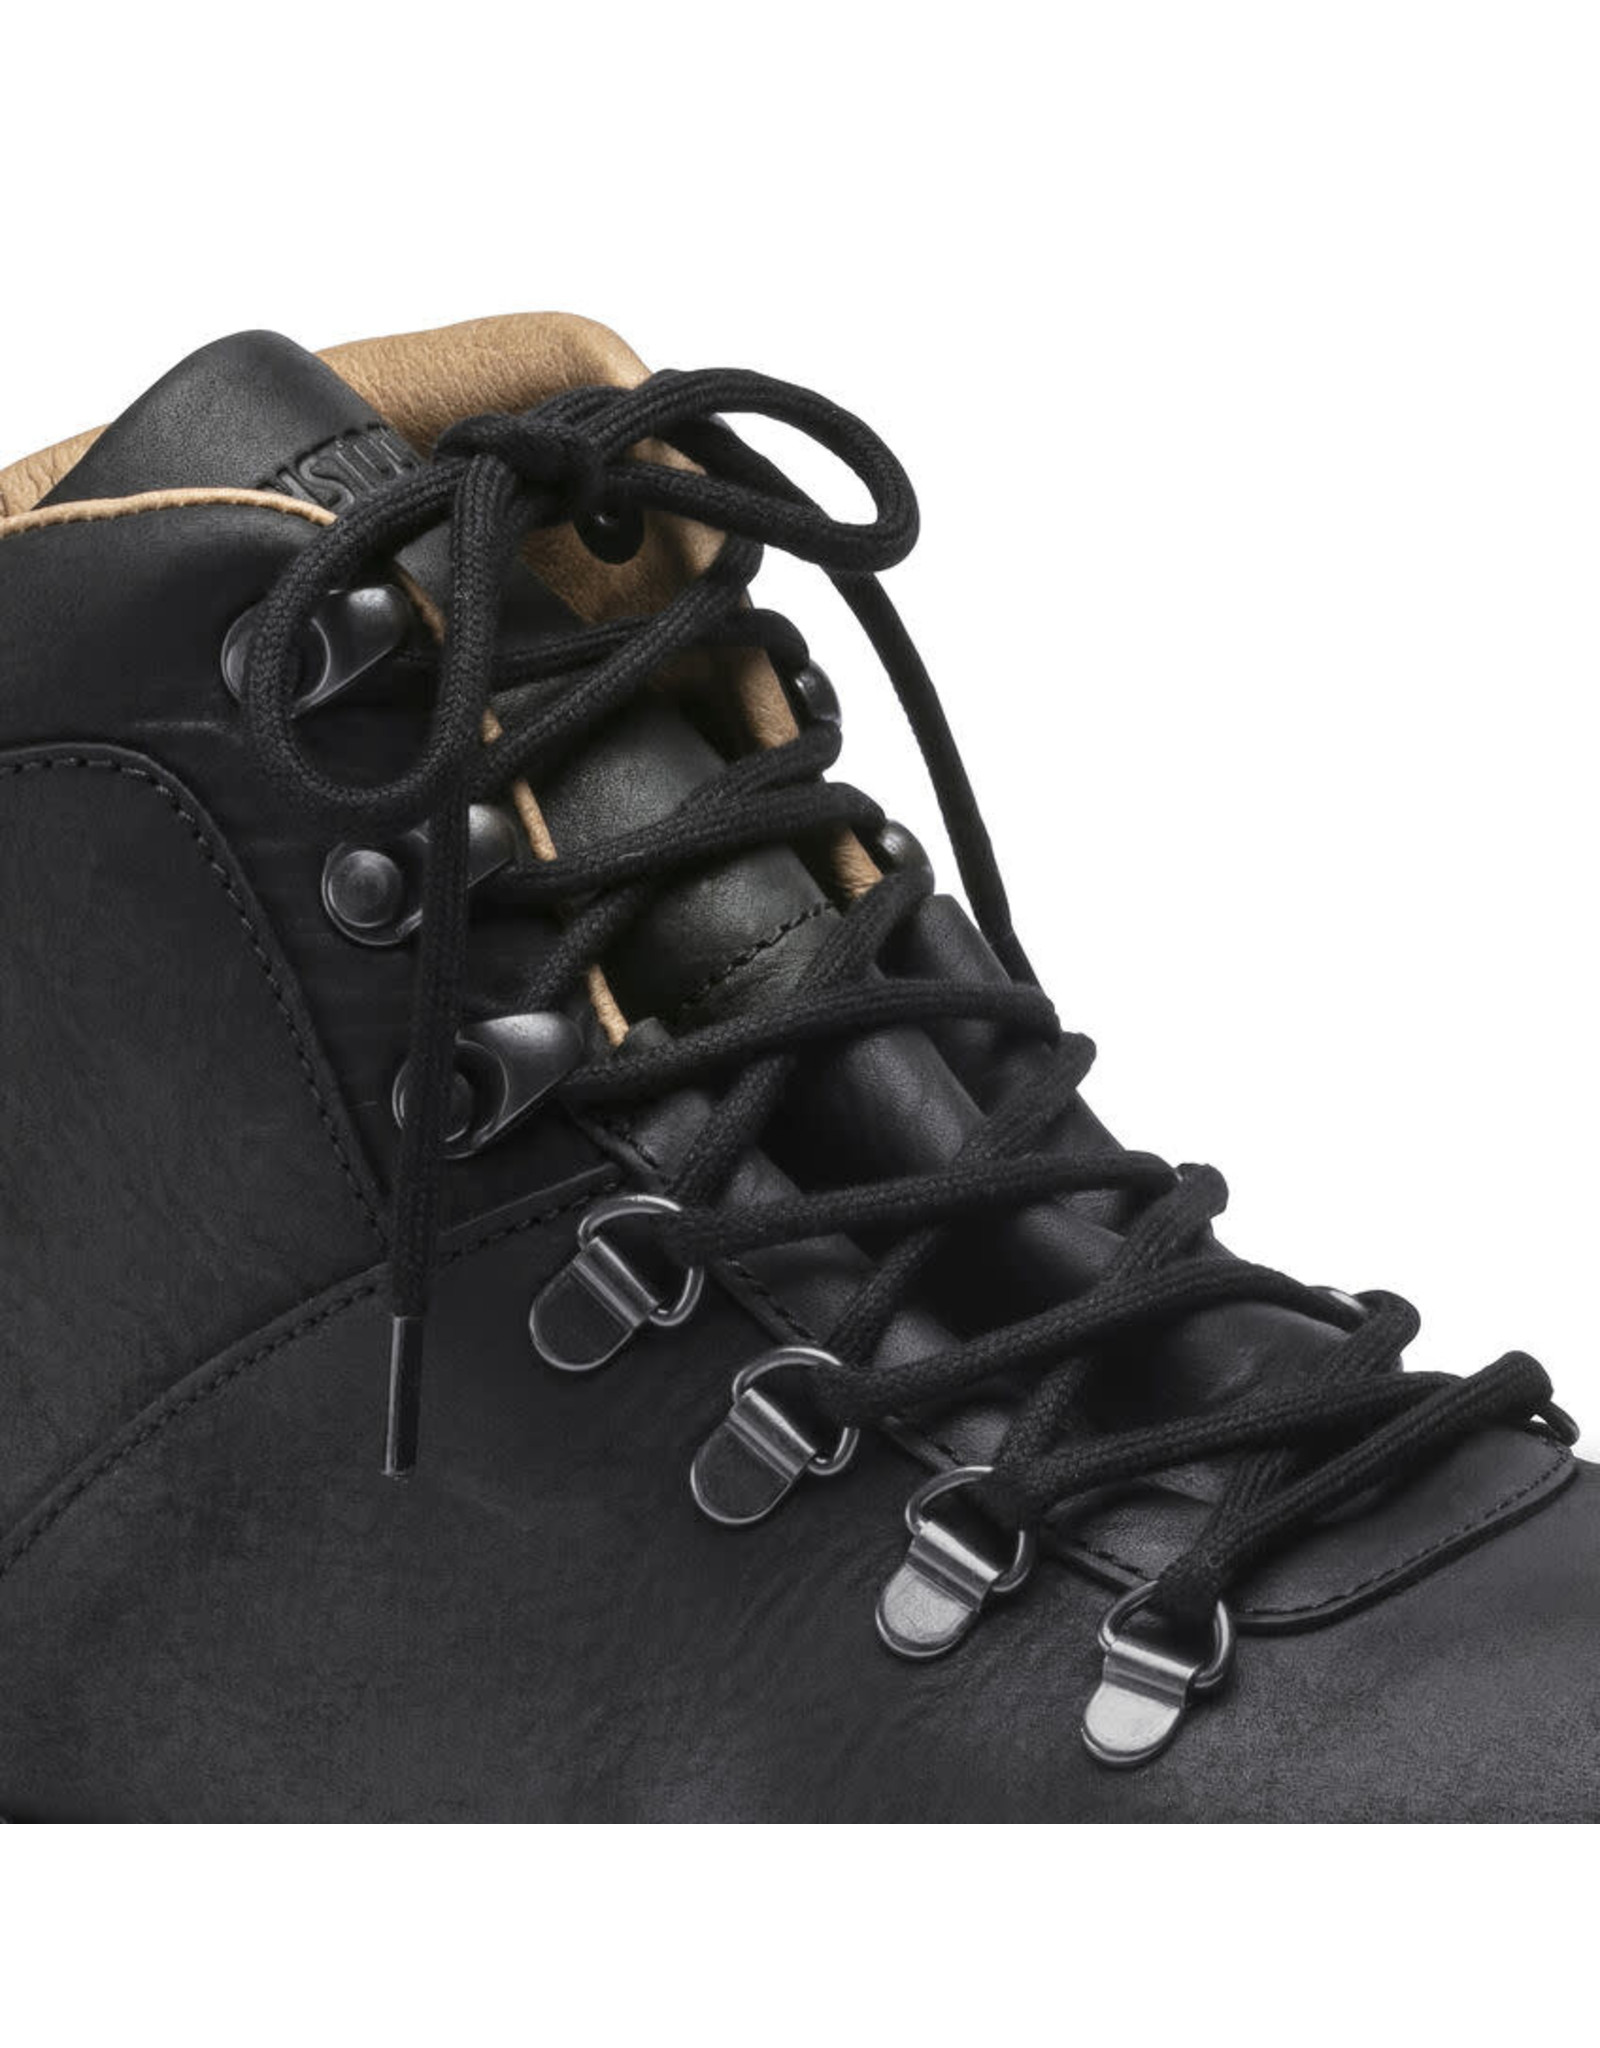 Birkenstock Jackson Nubuck Leather Boot